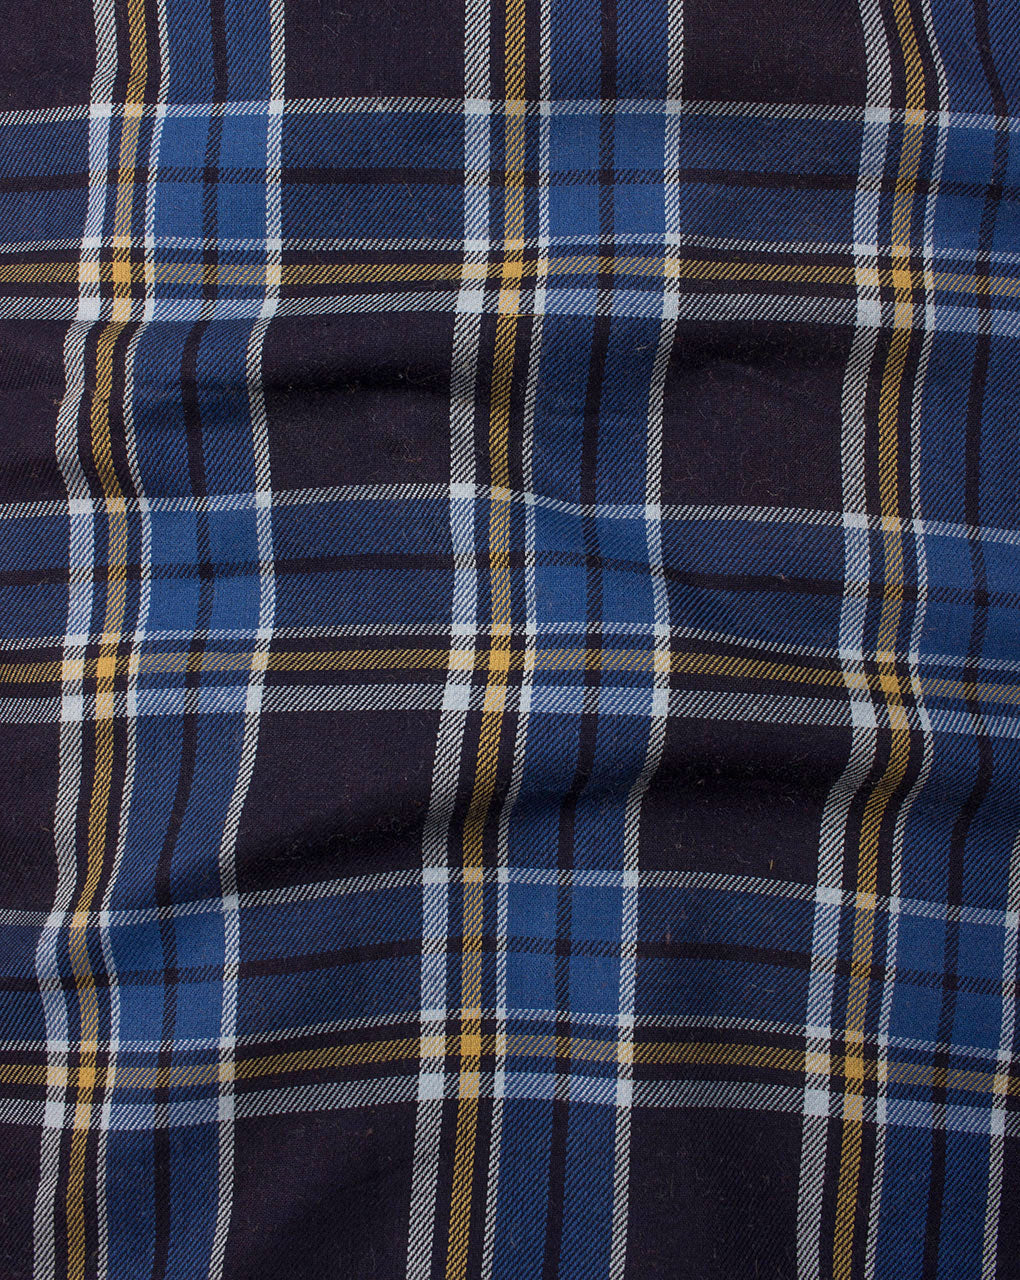 Woven Azo Free Dye indigo Tartan Checks Cotton Fabric ( Width 56 Inch ) - Fabriclore.com